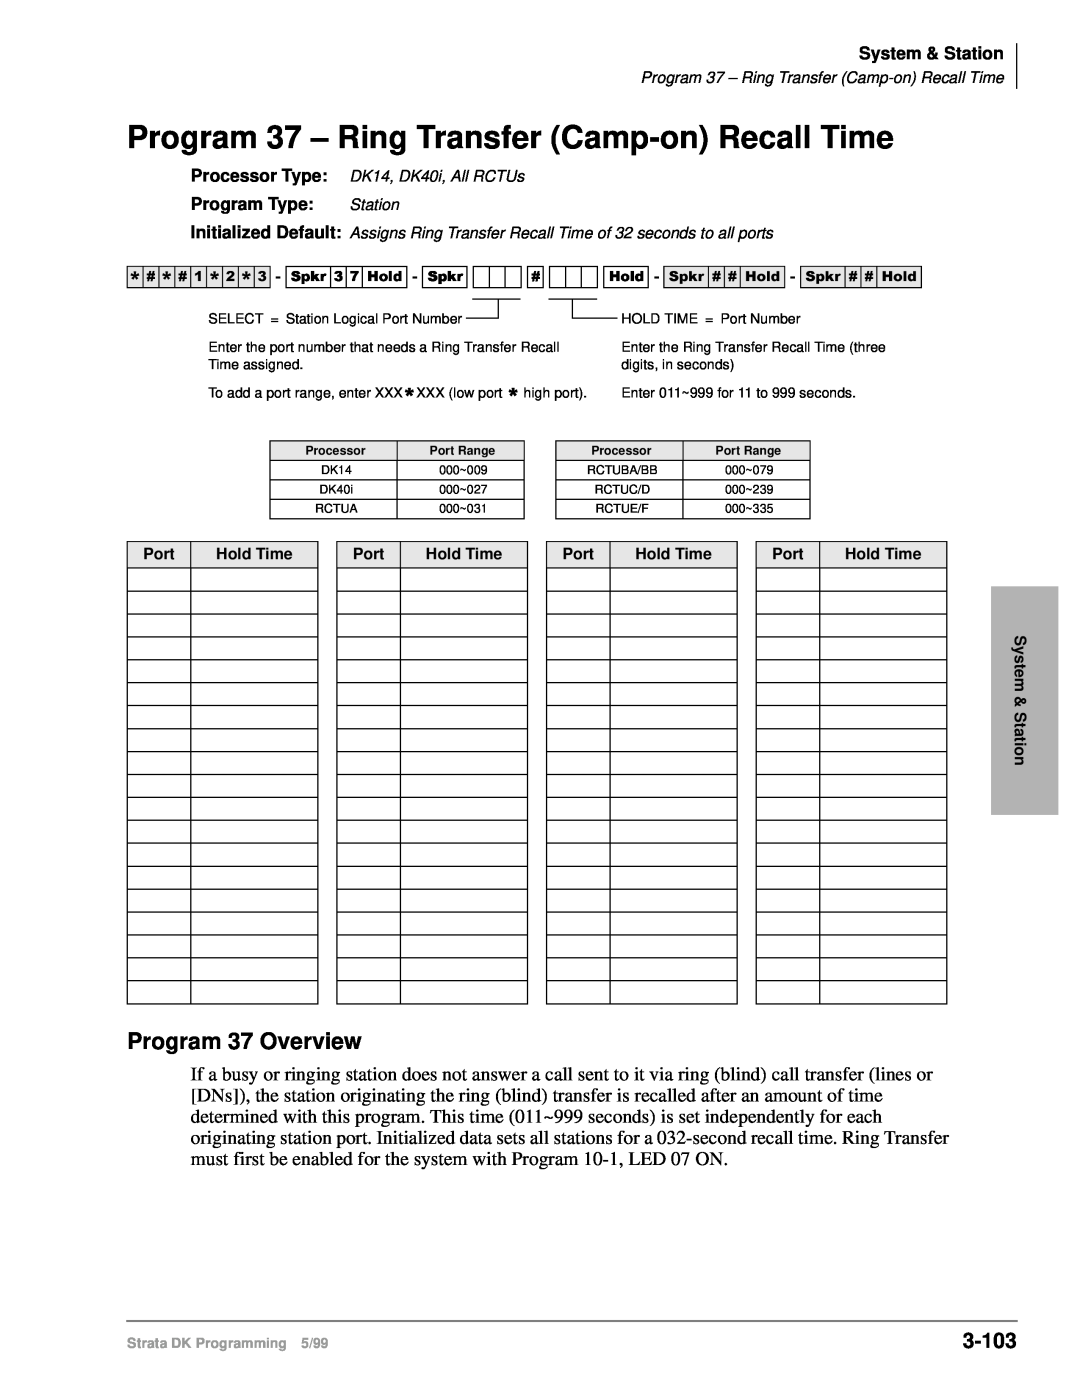 Toshiba dk14 manual Program 37 – Ring Transfer Camp-onRecall Time, Program 37 Overview, 3-103 